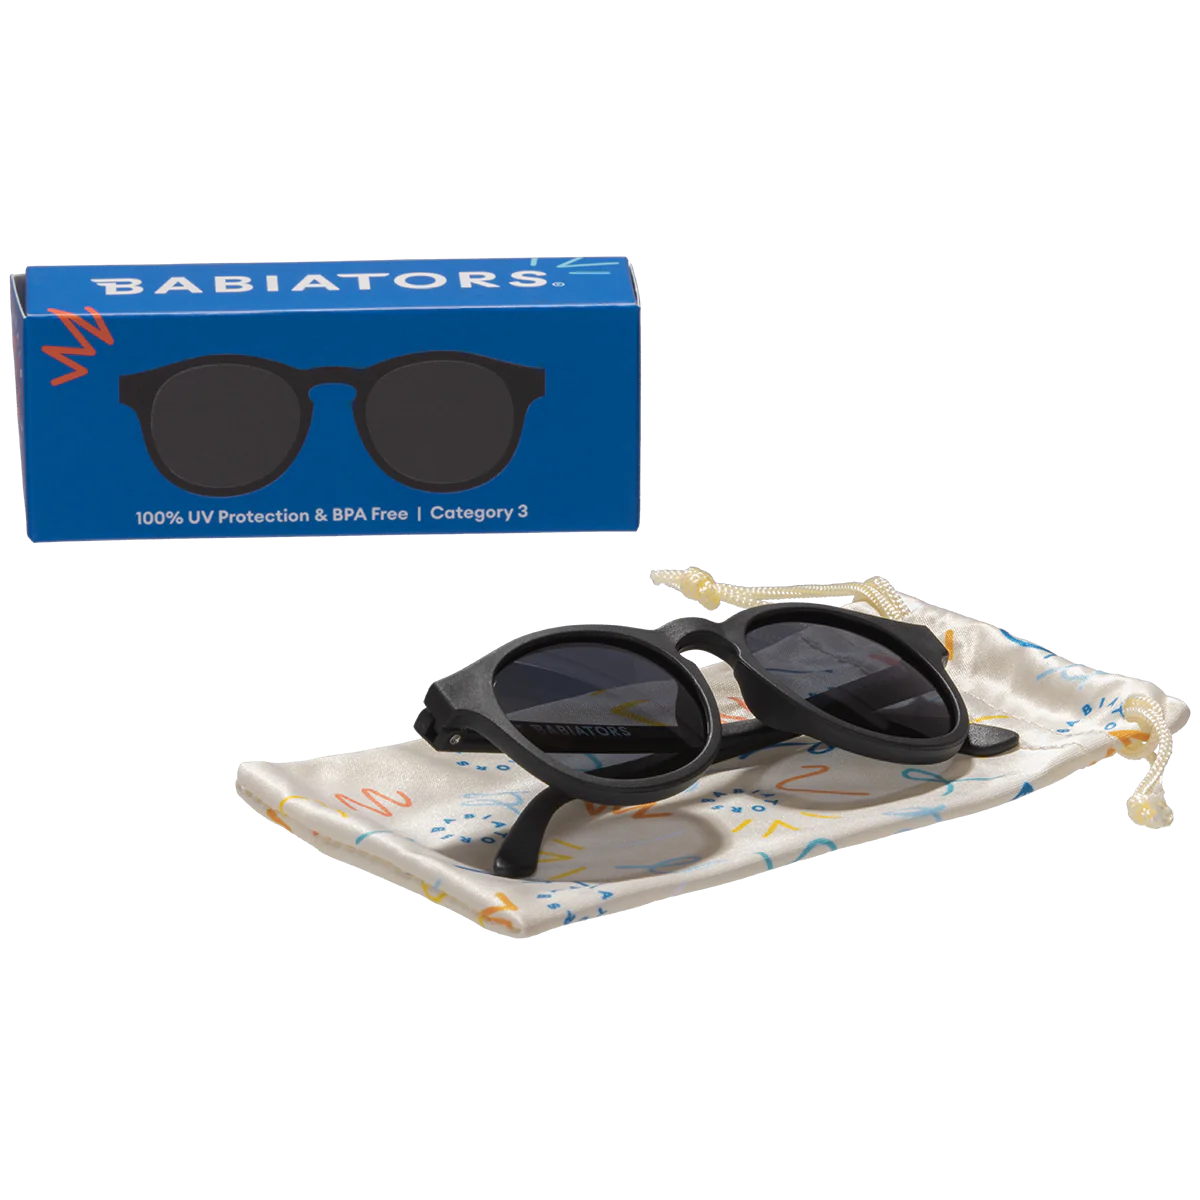 Babiators Original Keyholes - Jet Black Sunglasses Babiators 